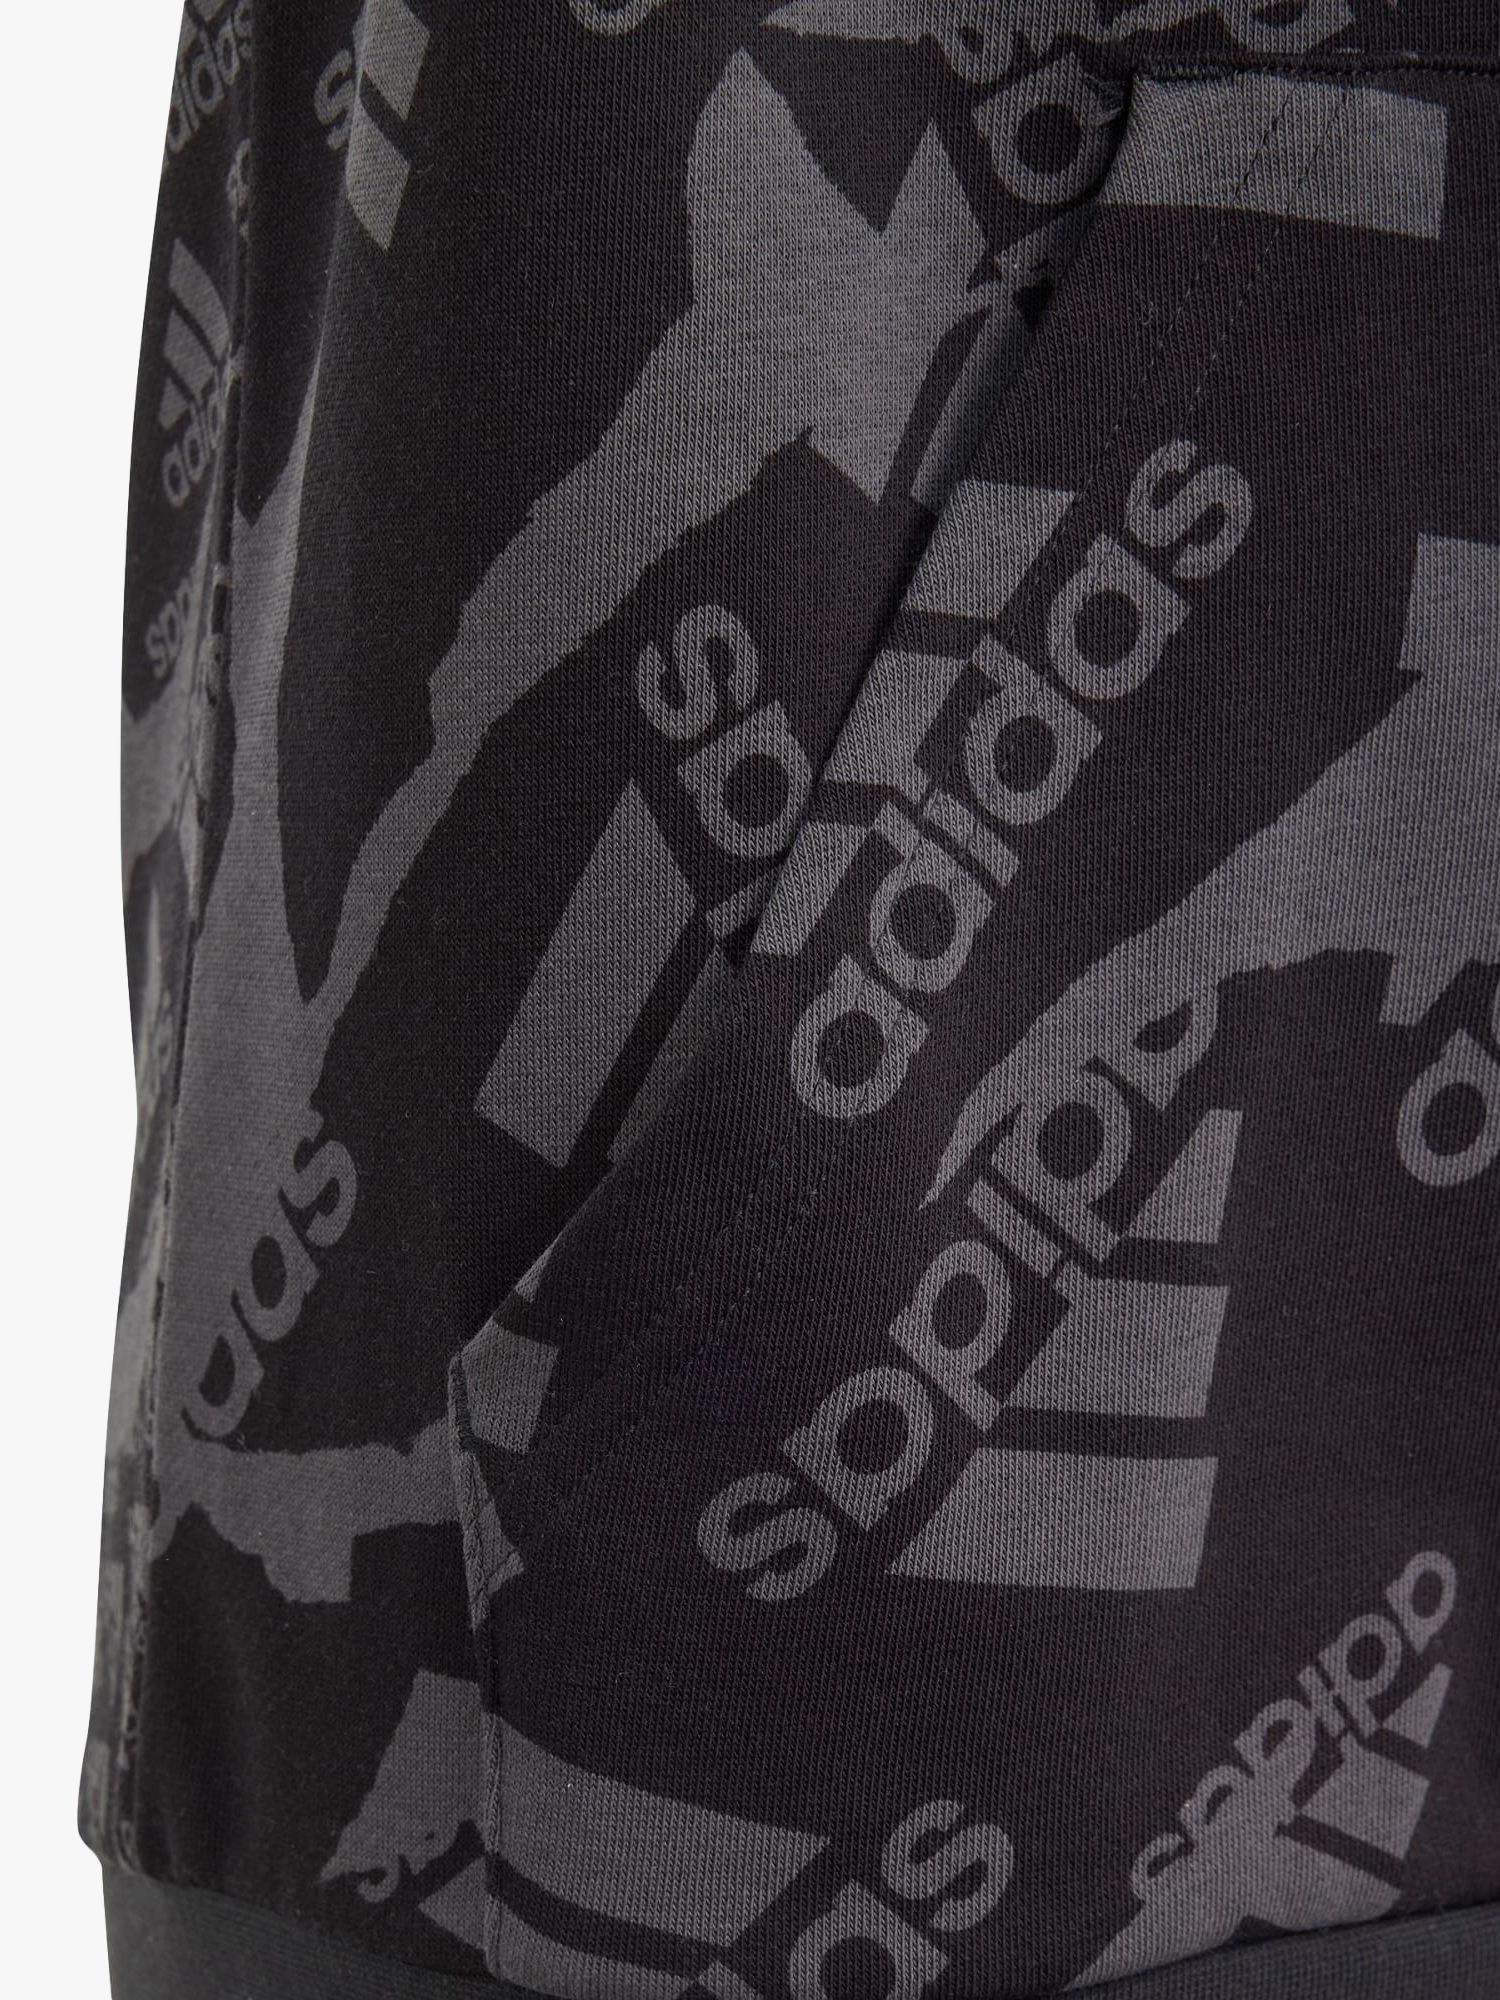 adidas Kids' J Camouflage Print Hoodie, Camo/Black, 13-14 years